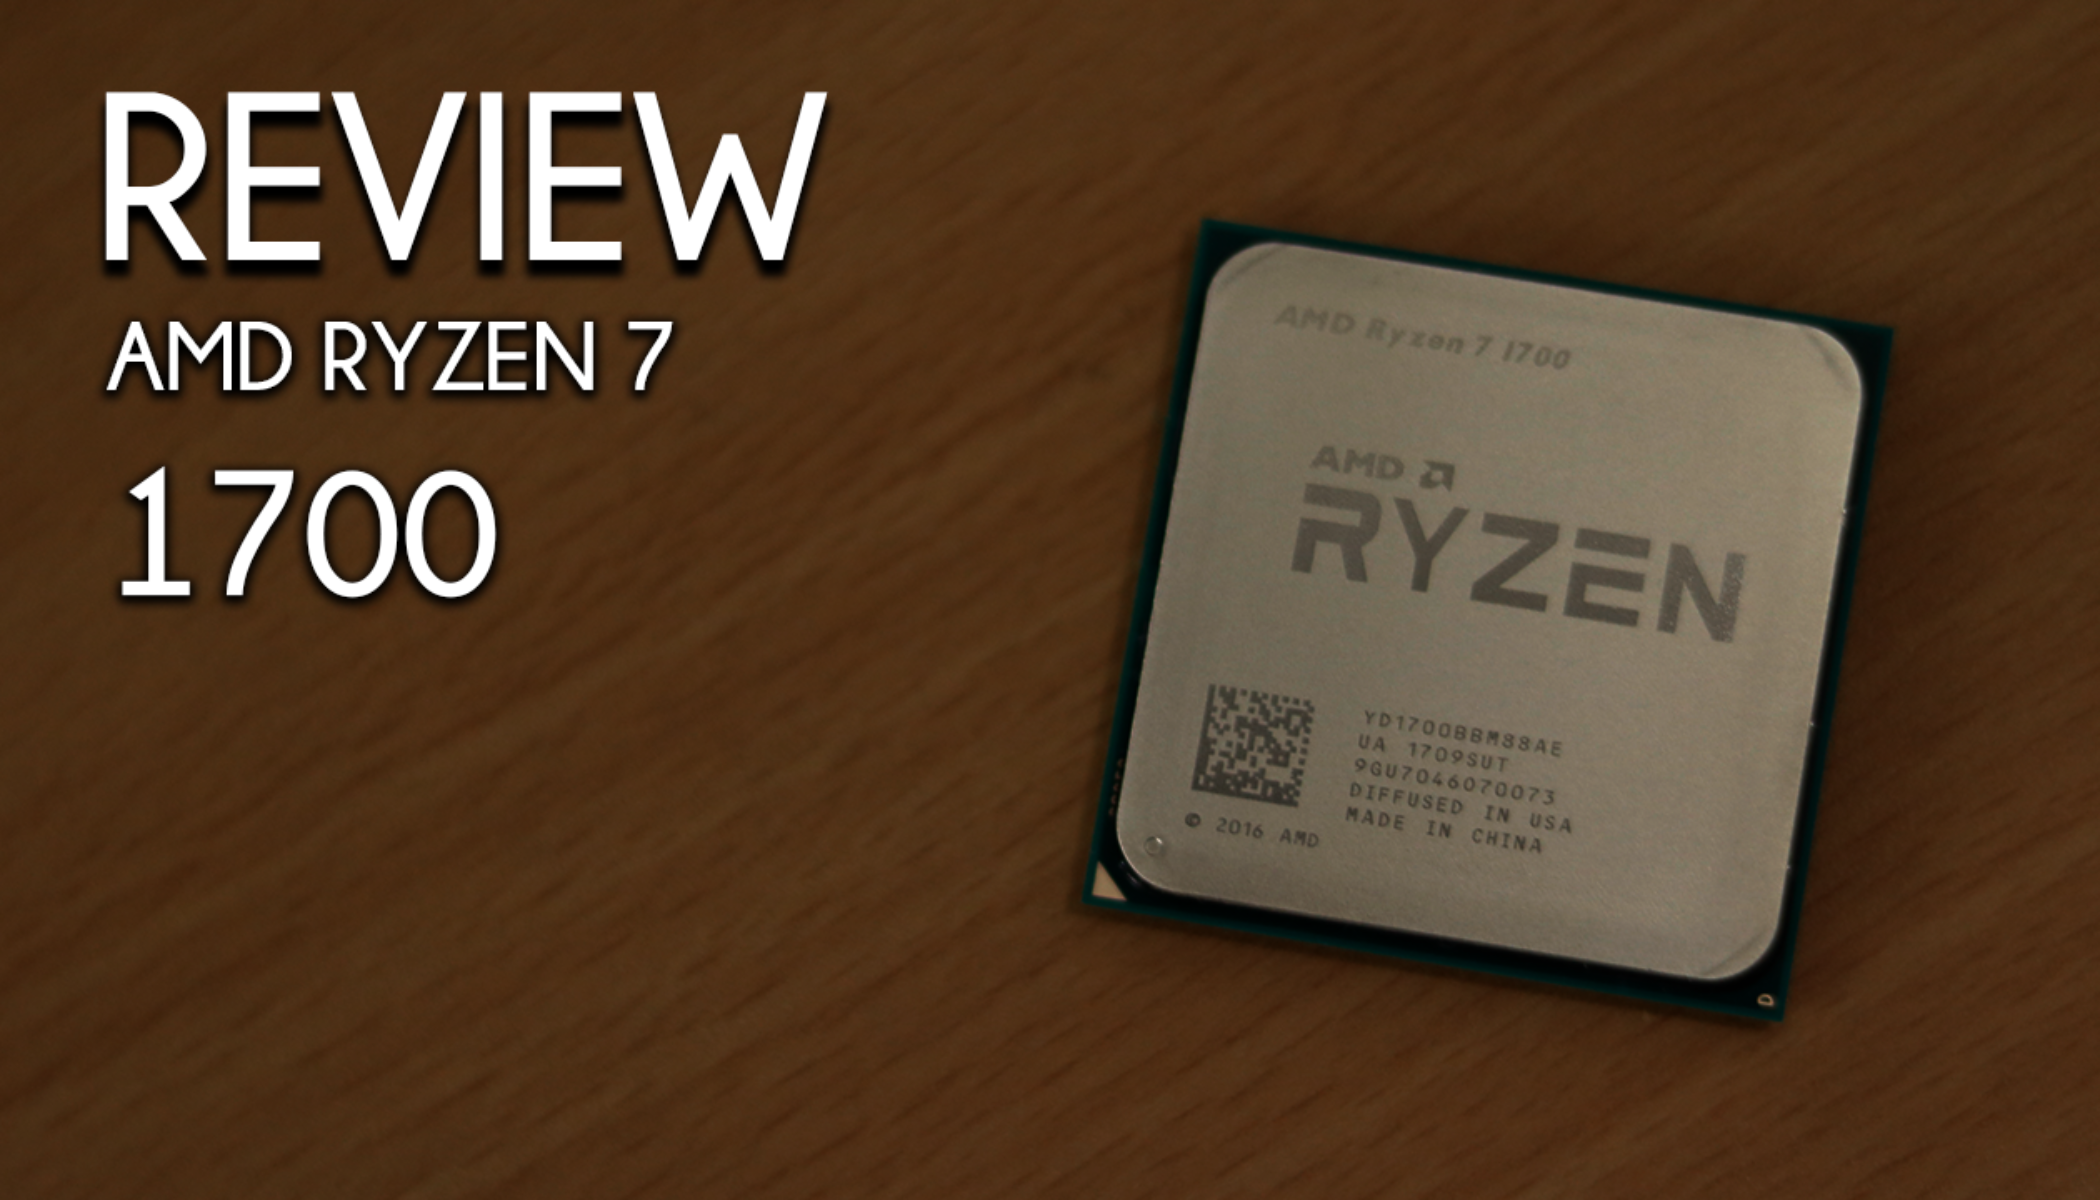 Ryzen 7 1700. Процессор AMD Ryzen 7 Pro 1700. АМД райзен 7 1700. Ryzen 7 1700 eight-Core Processor 3.0GHZ.